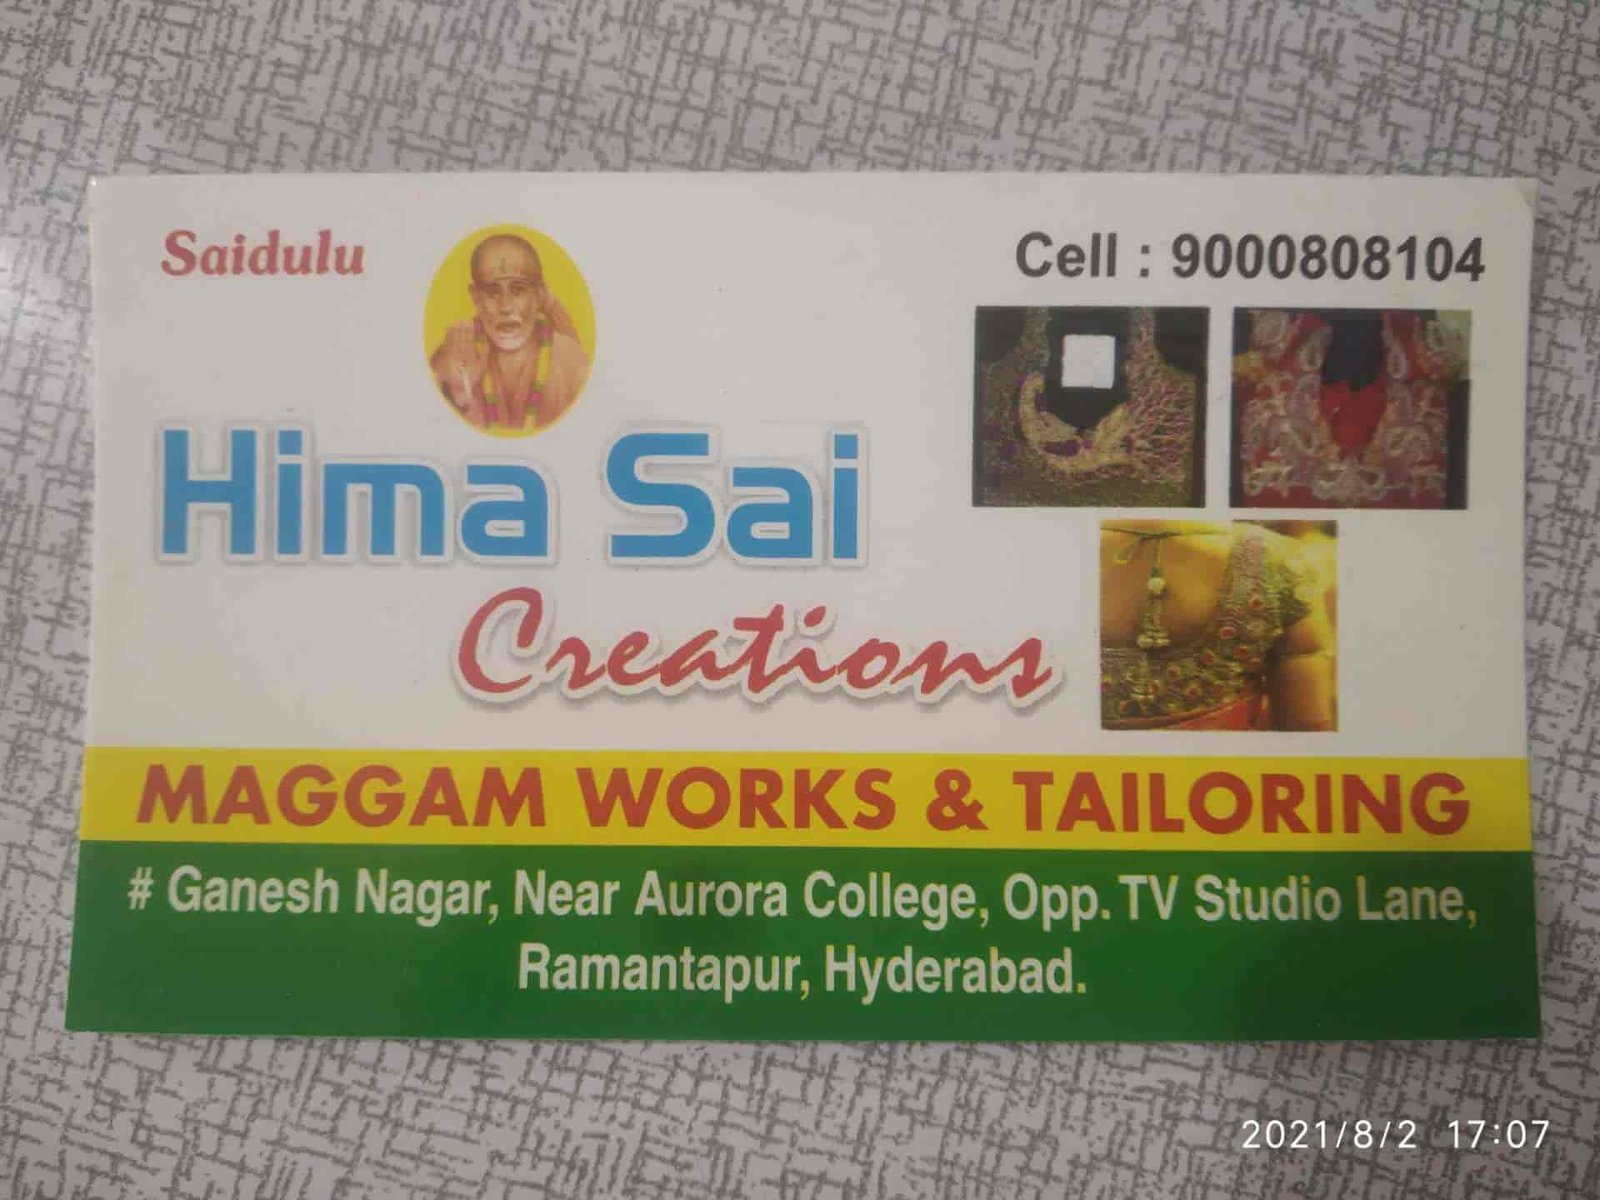 Hina Sai Garments